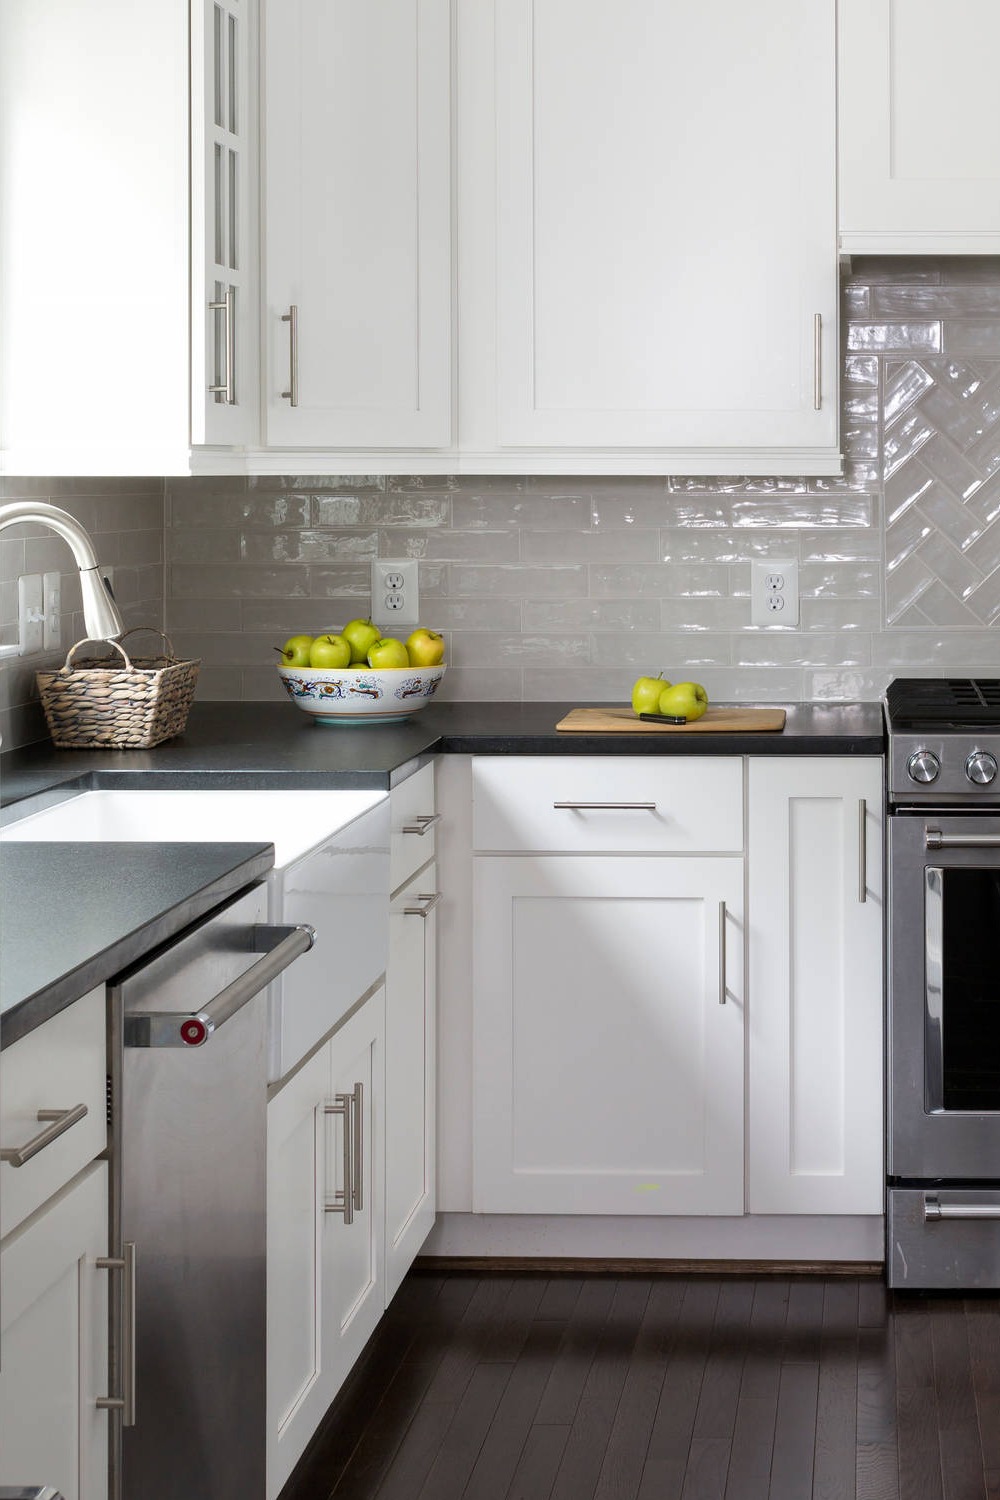 Honed Black Granite Counters Shaker White Cabinetry Grey Subway Tile Hardwood Flooring Farmhouse Kitchen